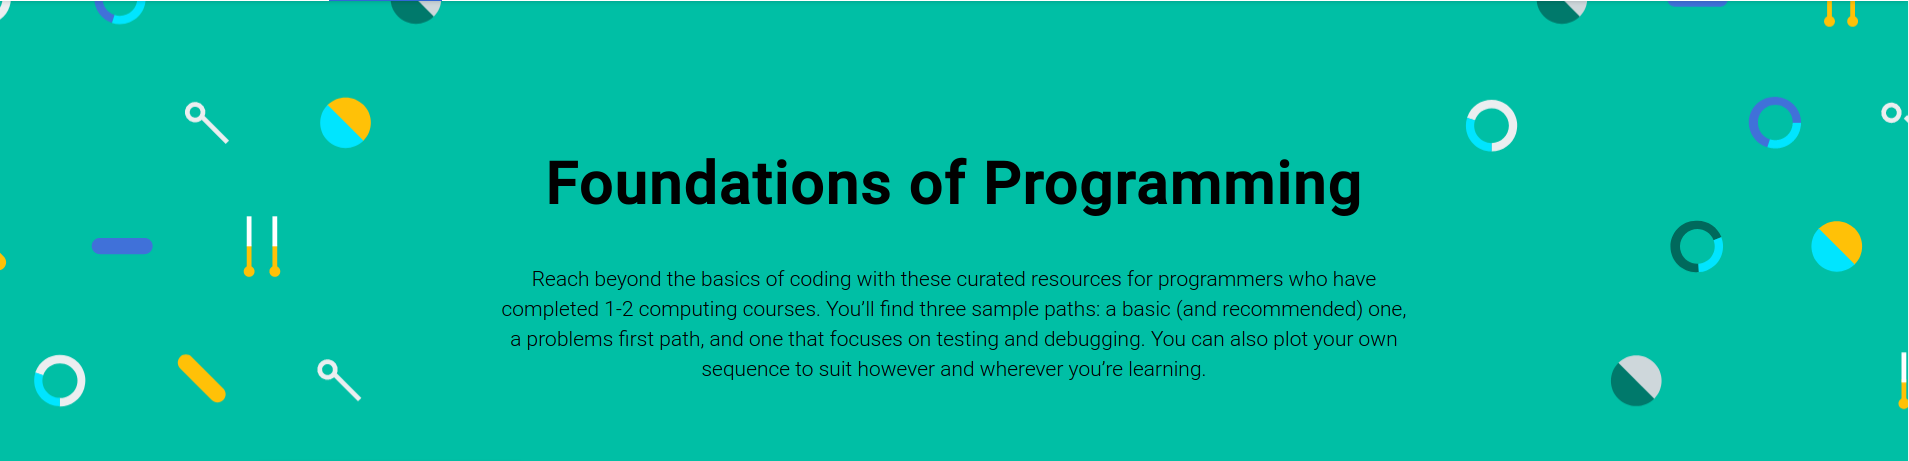 Google Tech Dev Guide Foundations of
Programming